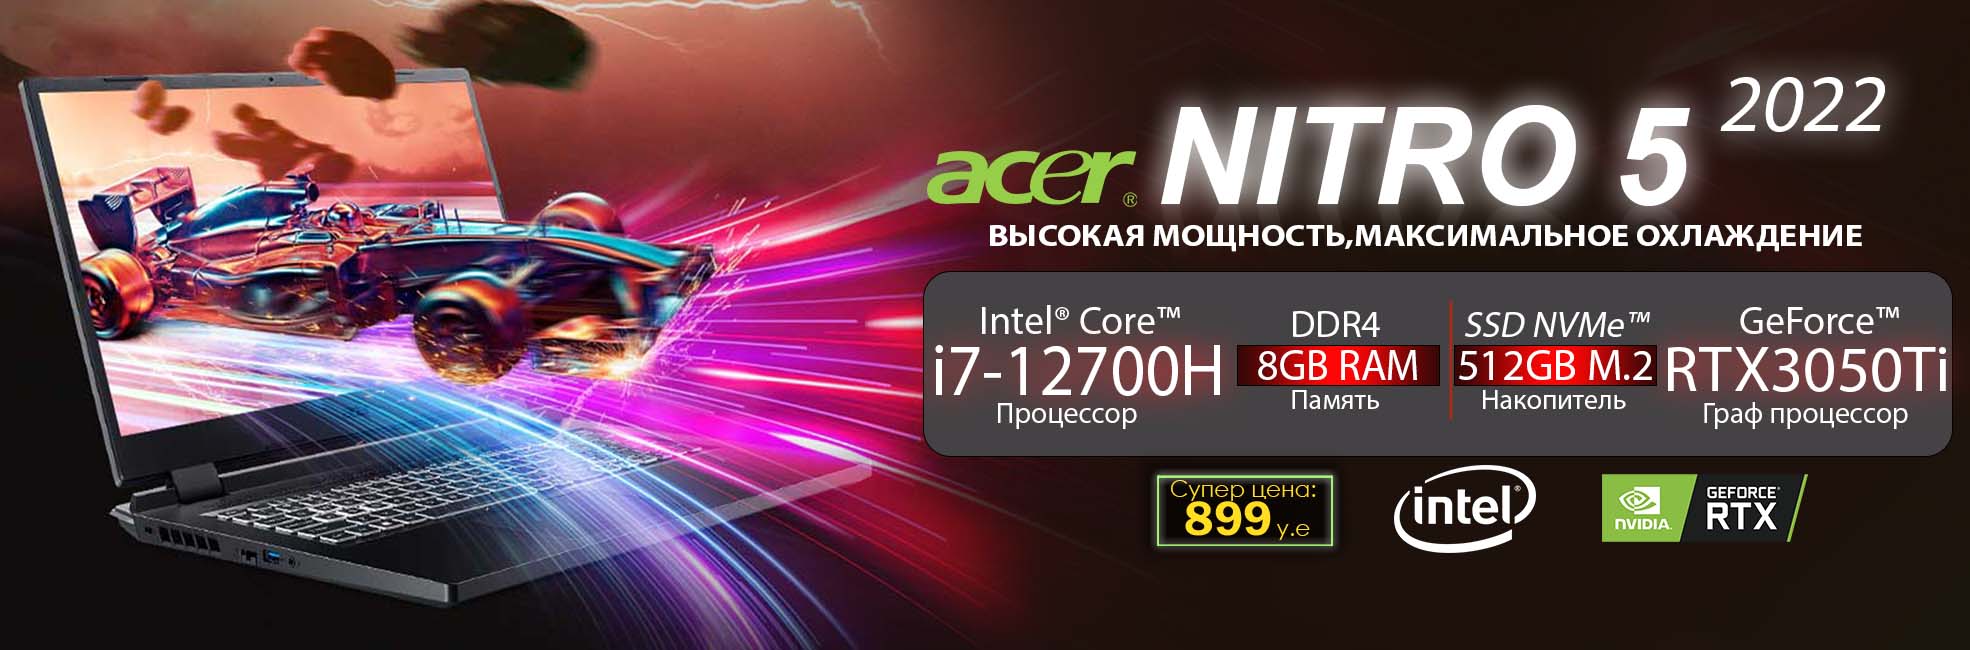 Acer Nitro i7 1970x650 1 Racer Nitro-Acer Nitro Noutbuklari